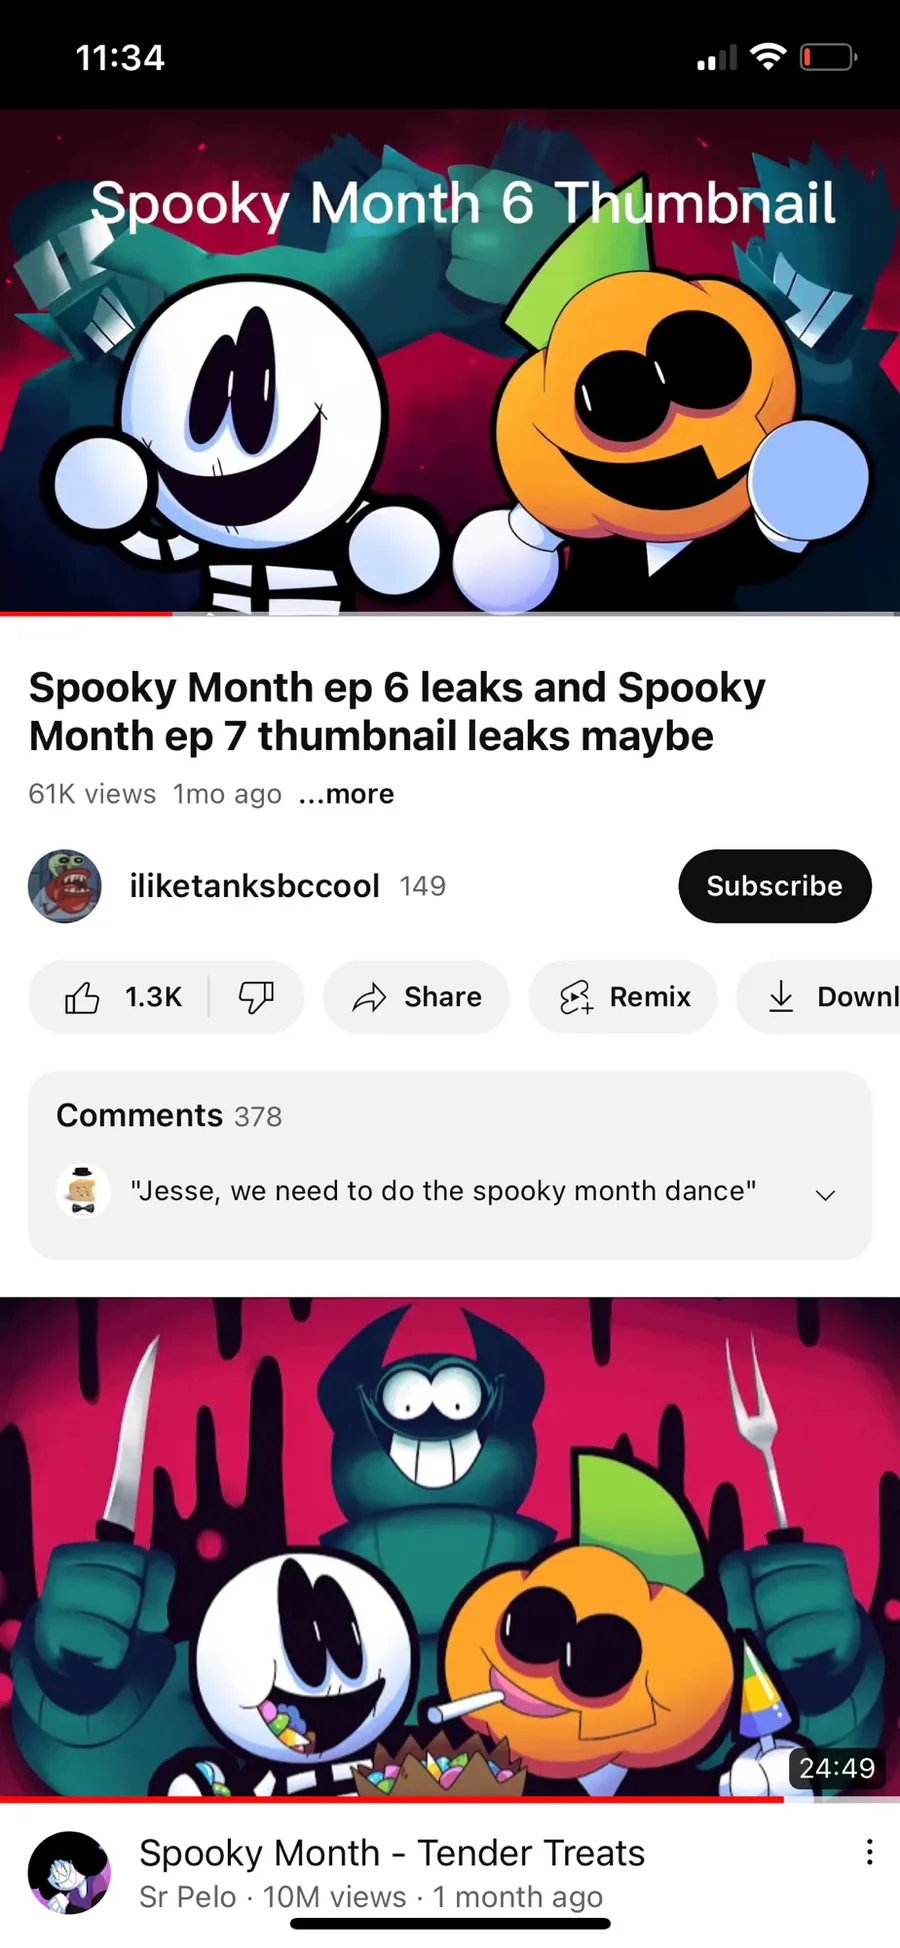 woah spooky month 6 leak REAL?? jkjk vid/animation credits